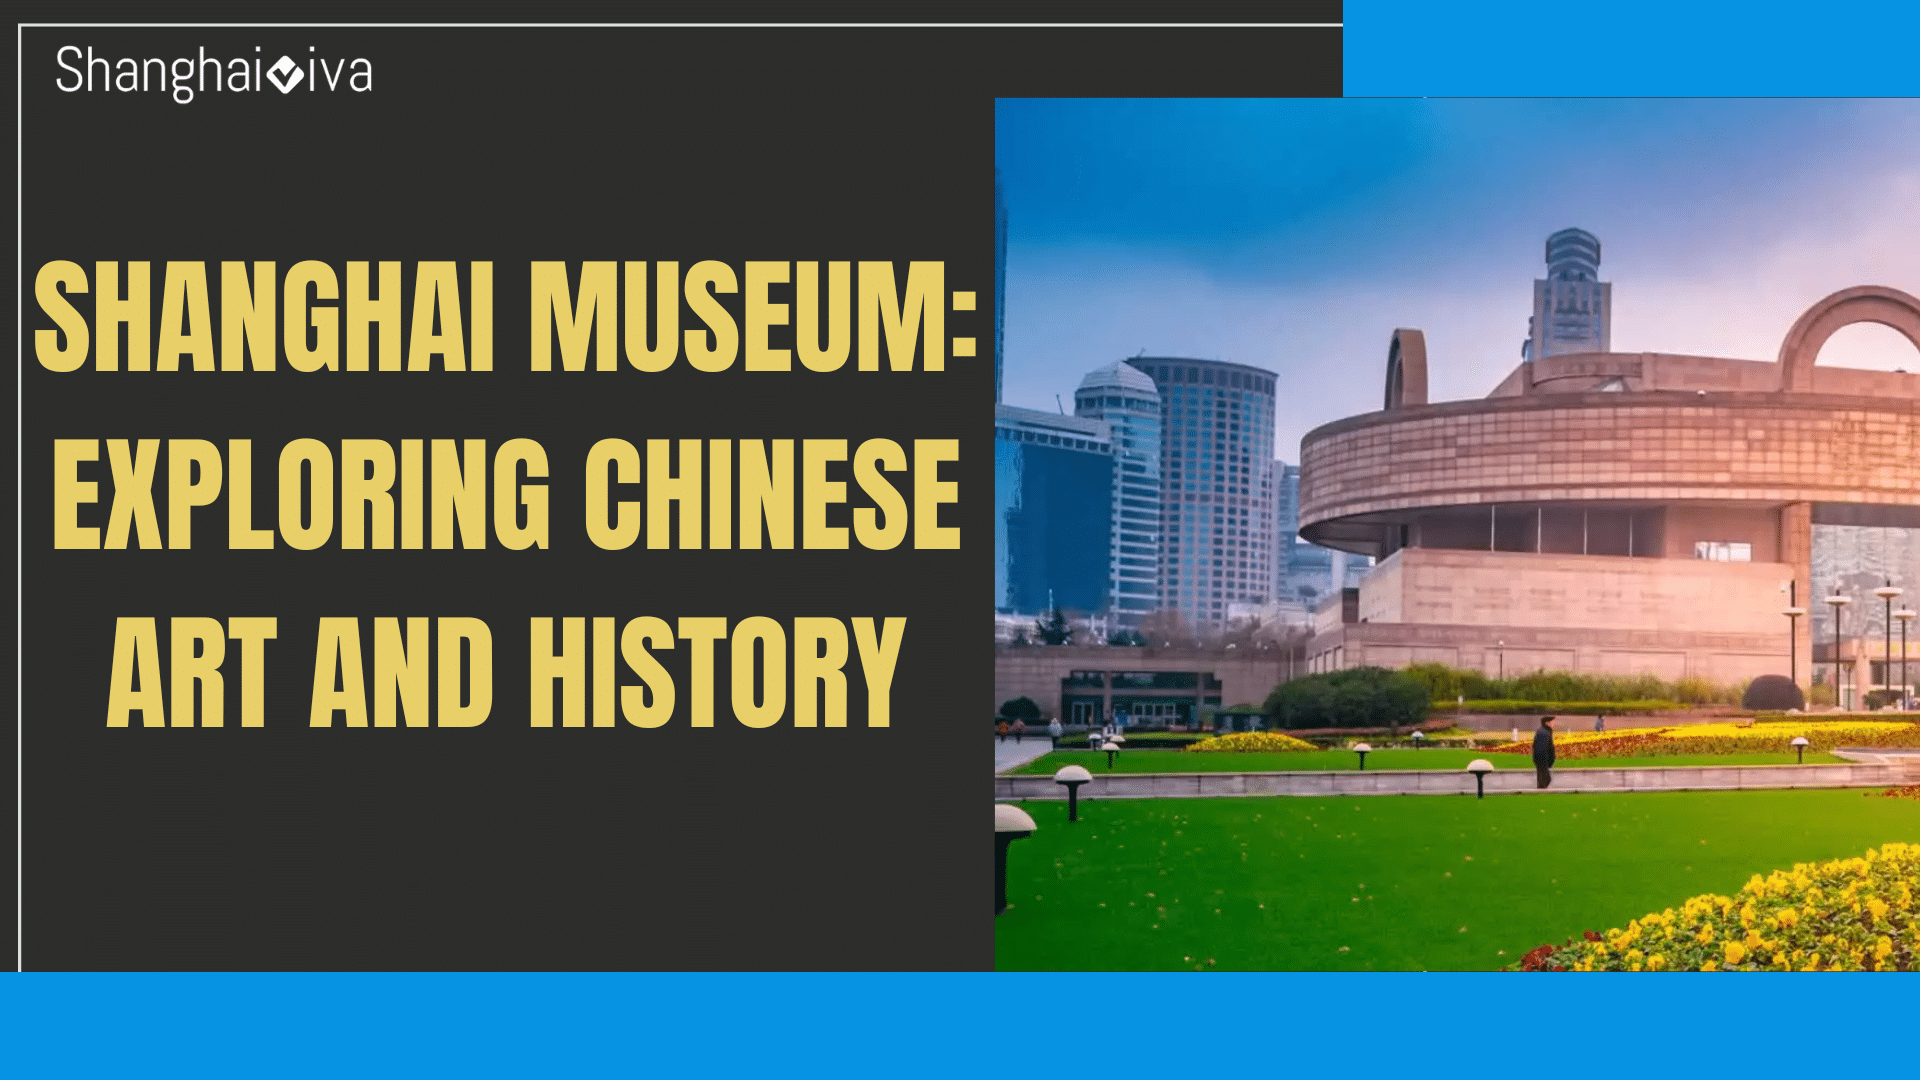 Shanghai Museum: Exploring Chinese Art and History